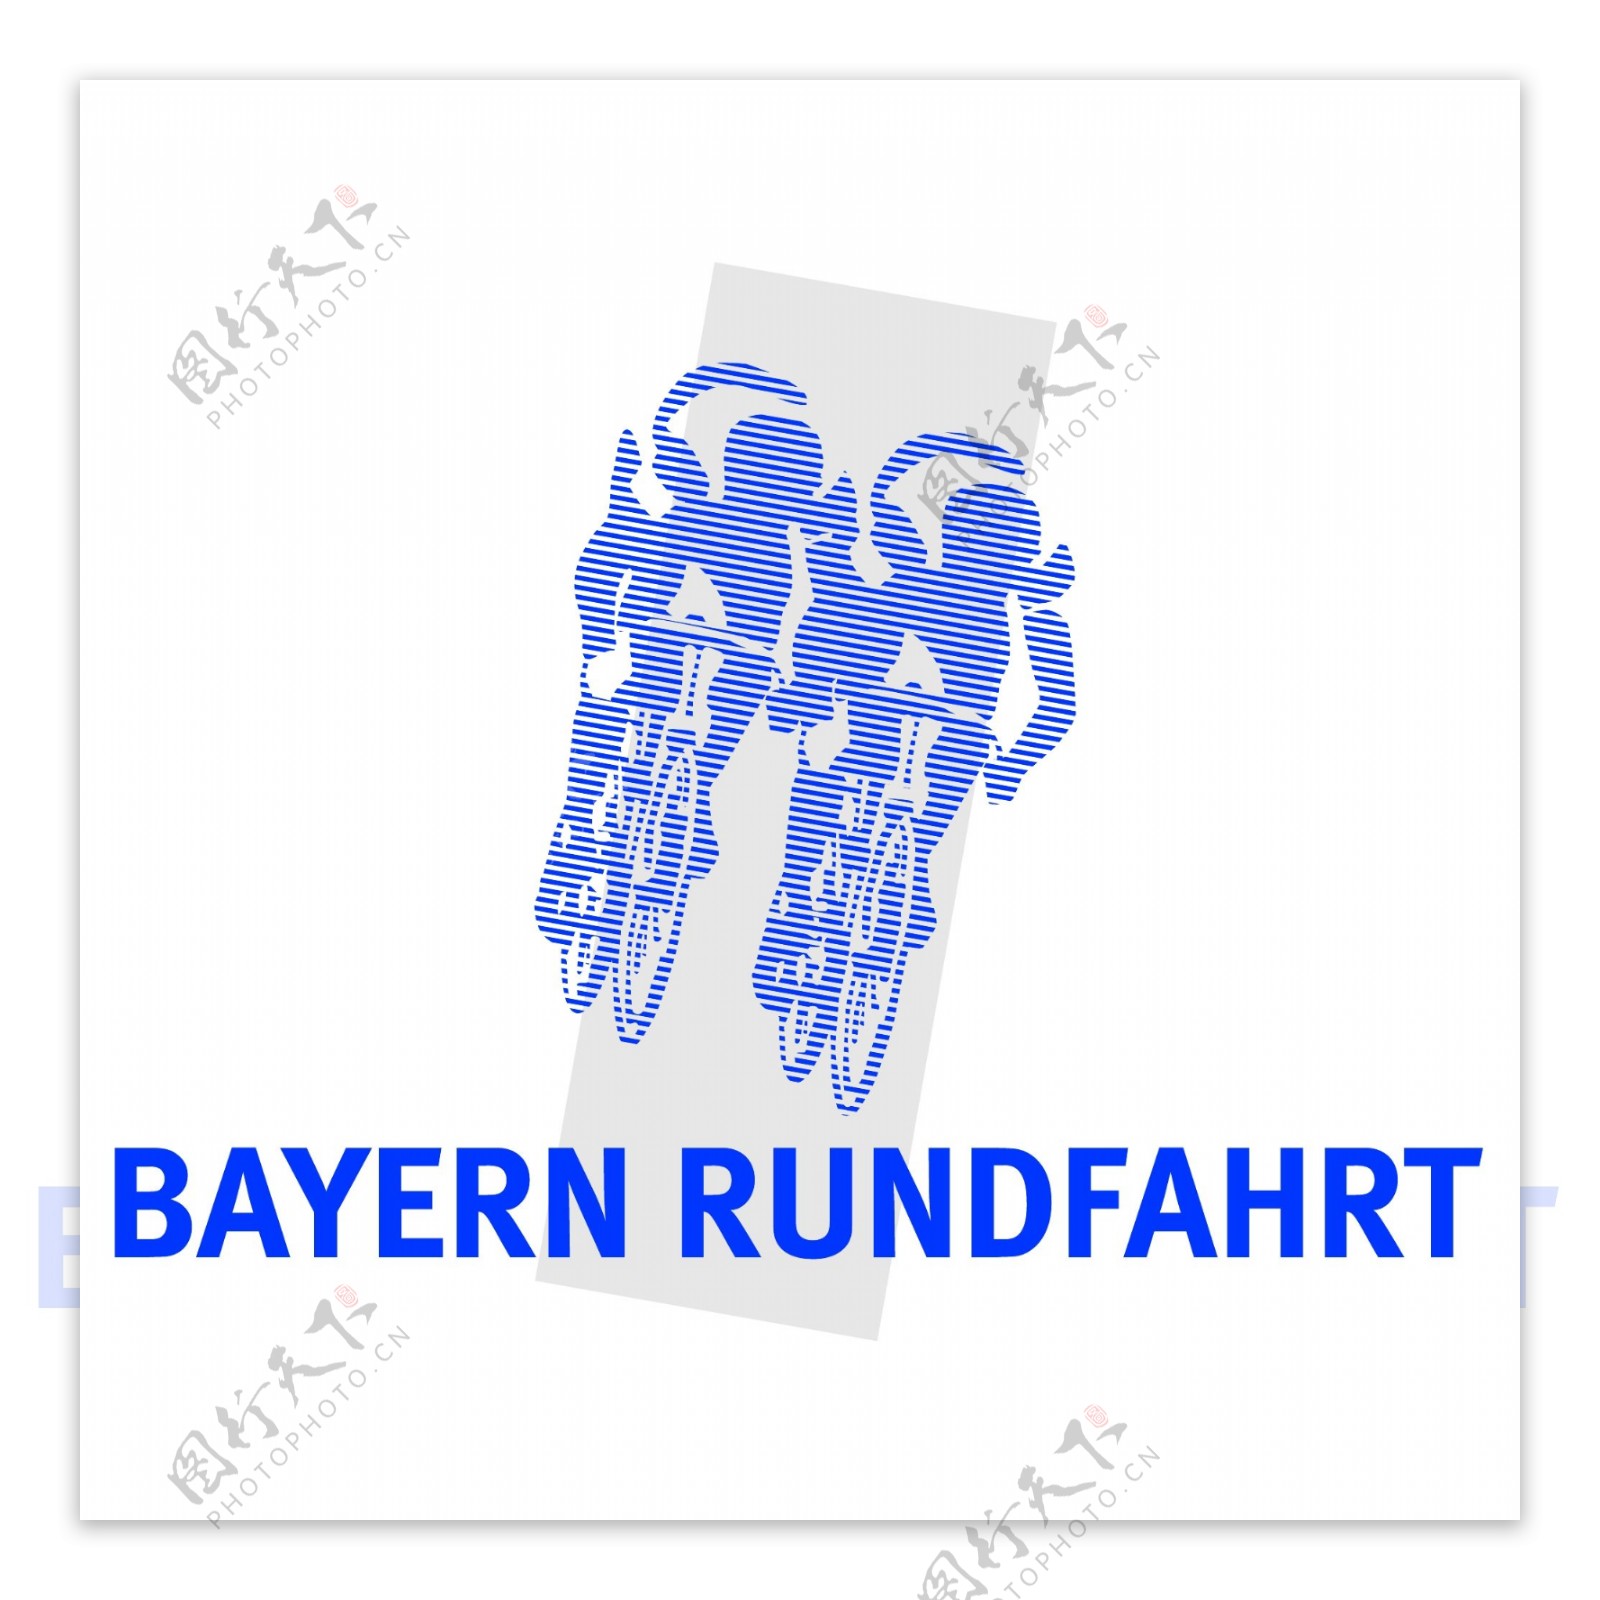 BayernRundfahrtlogo设计欣赏BayernRundfahrt运动标志下载标志设计欣赏